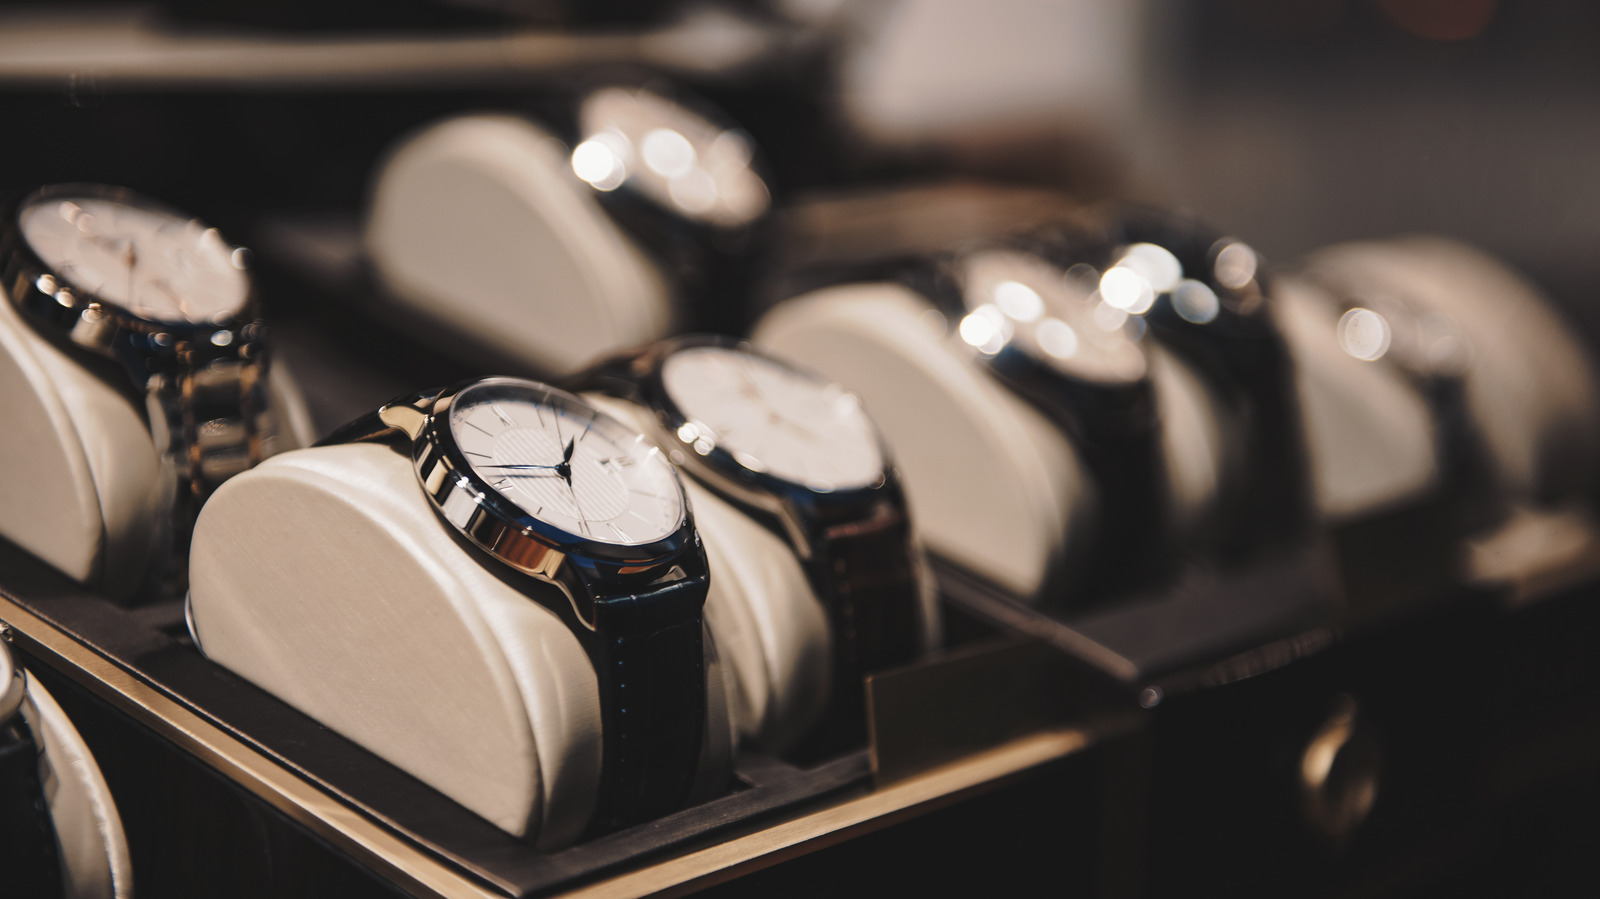 Ranking Top Luxury Watch Brands from BEST to WORST (22 Watches!) 